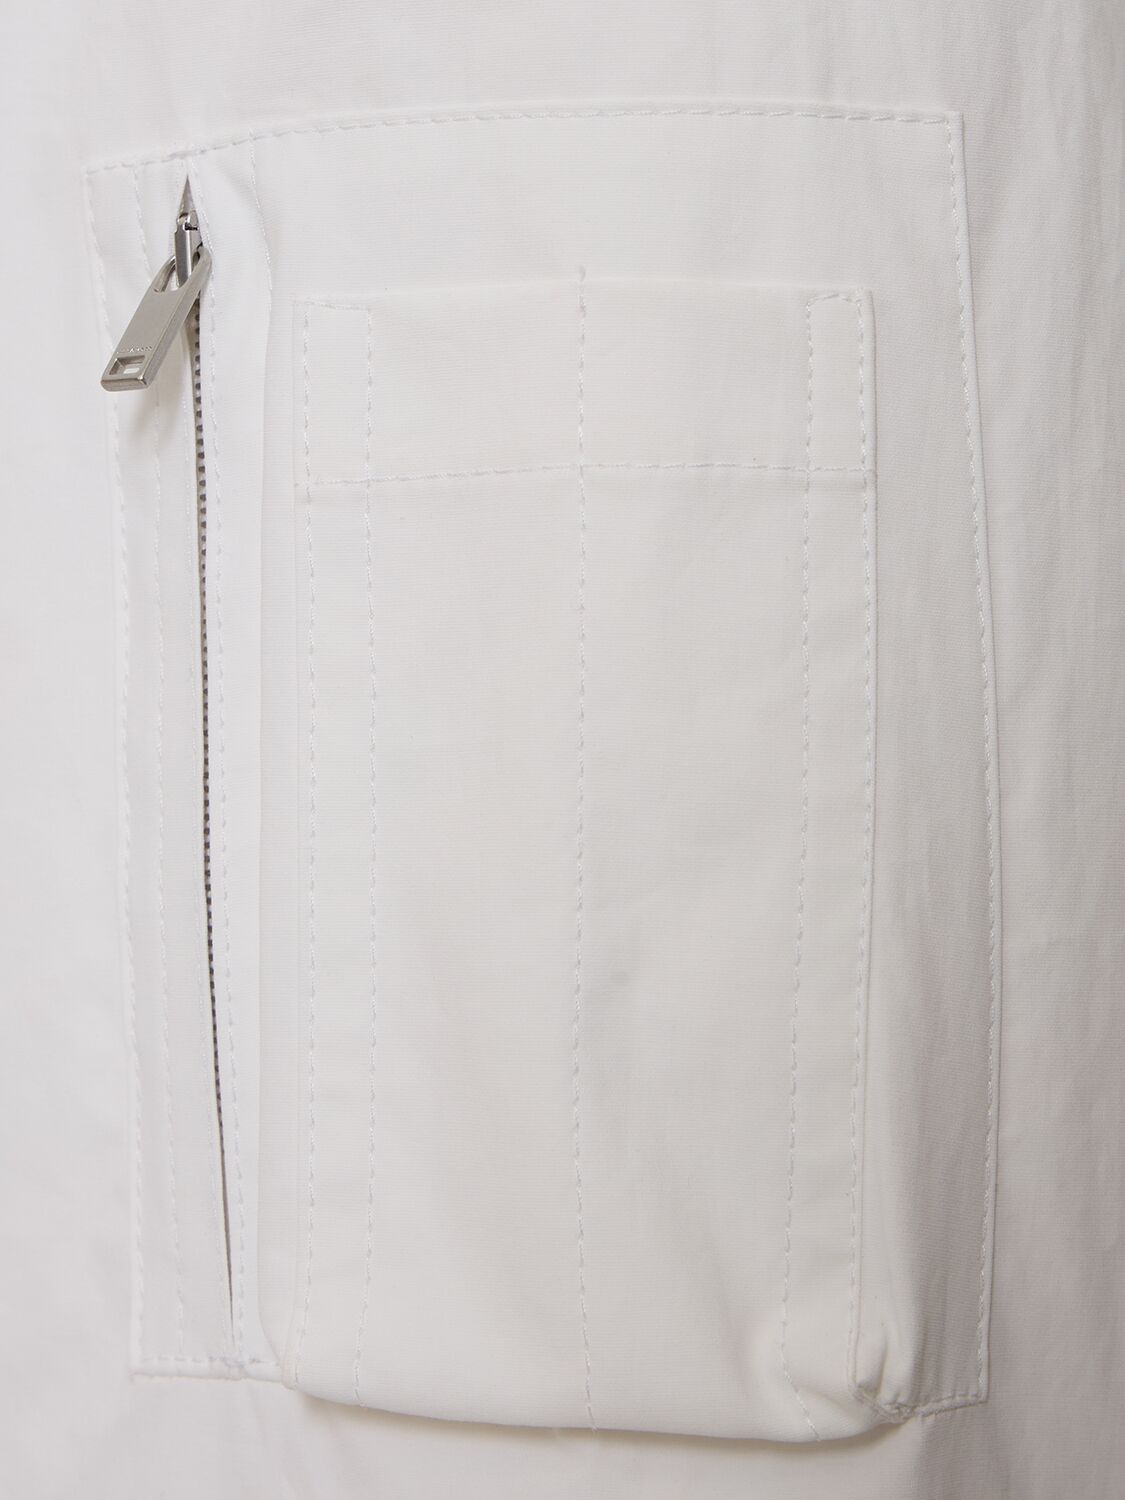 Shop Jil Sander Oversize Cotton Down Bomber Jacket In White